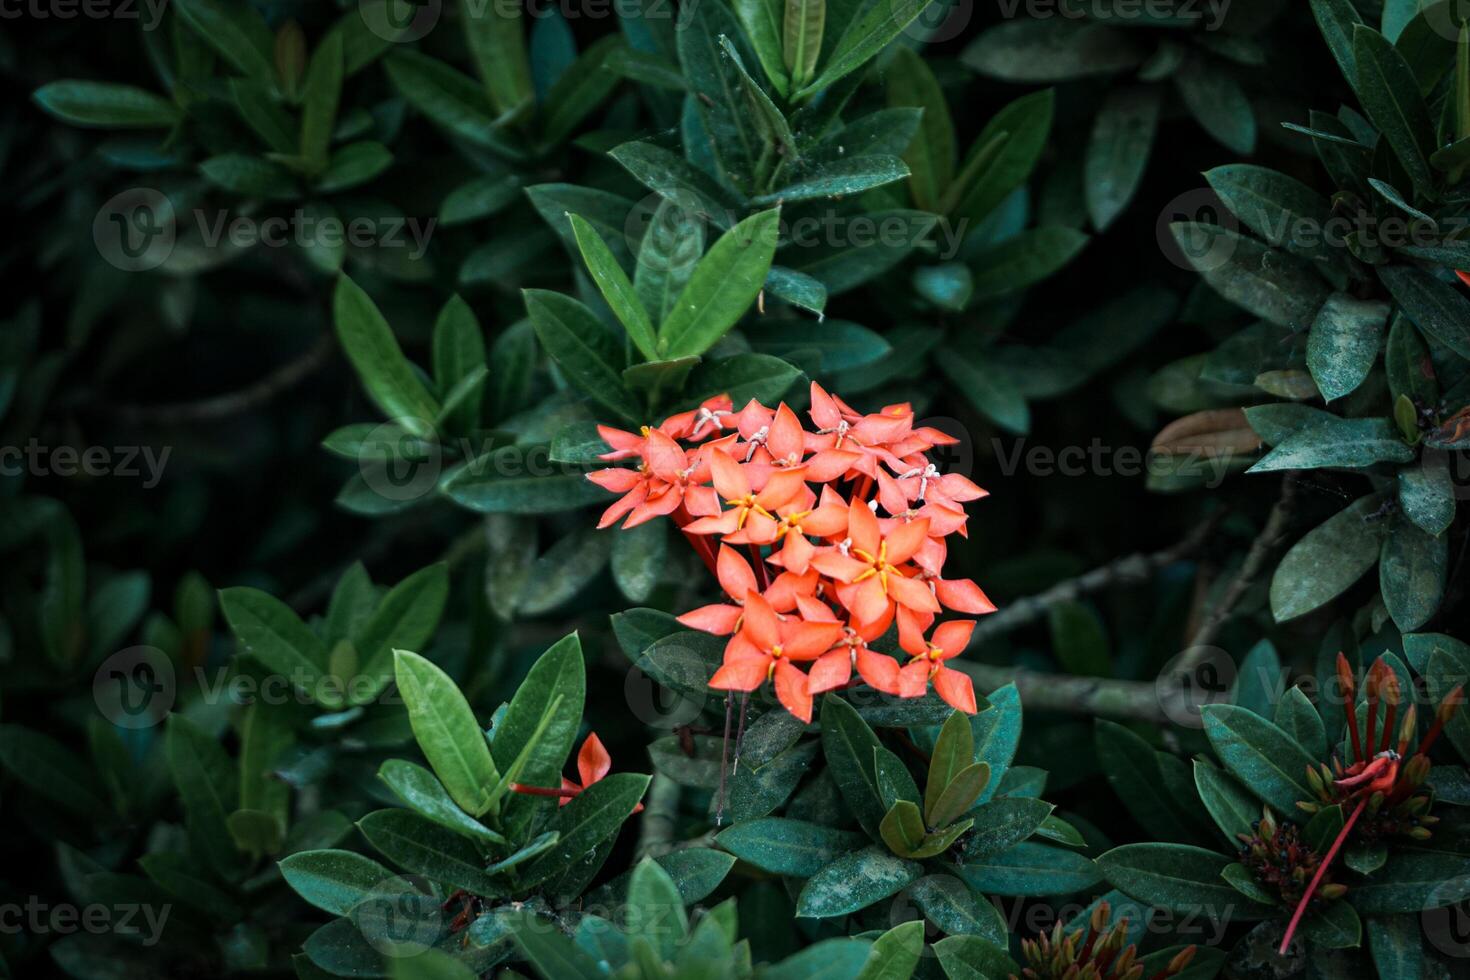 ashoka blommor blomma vackert i de torr säsong i lantlig områden av indonesien foto